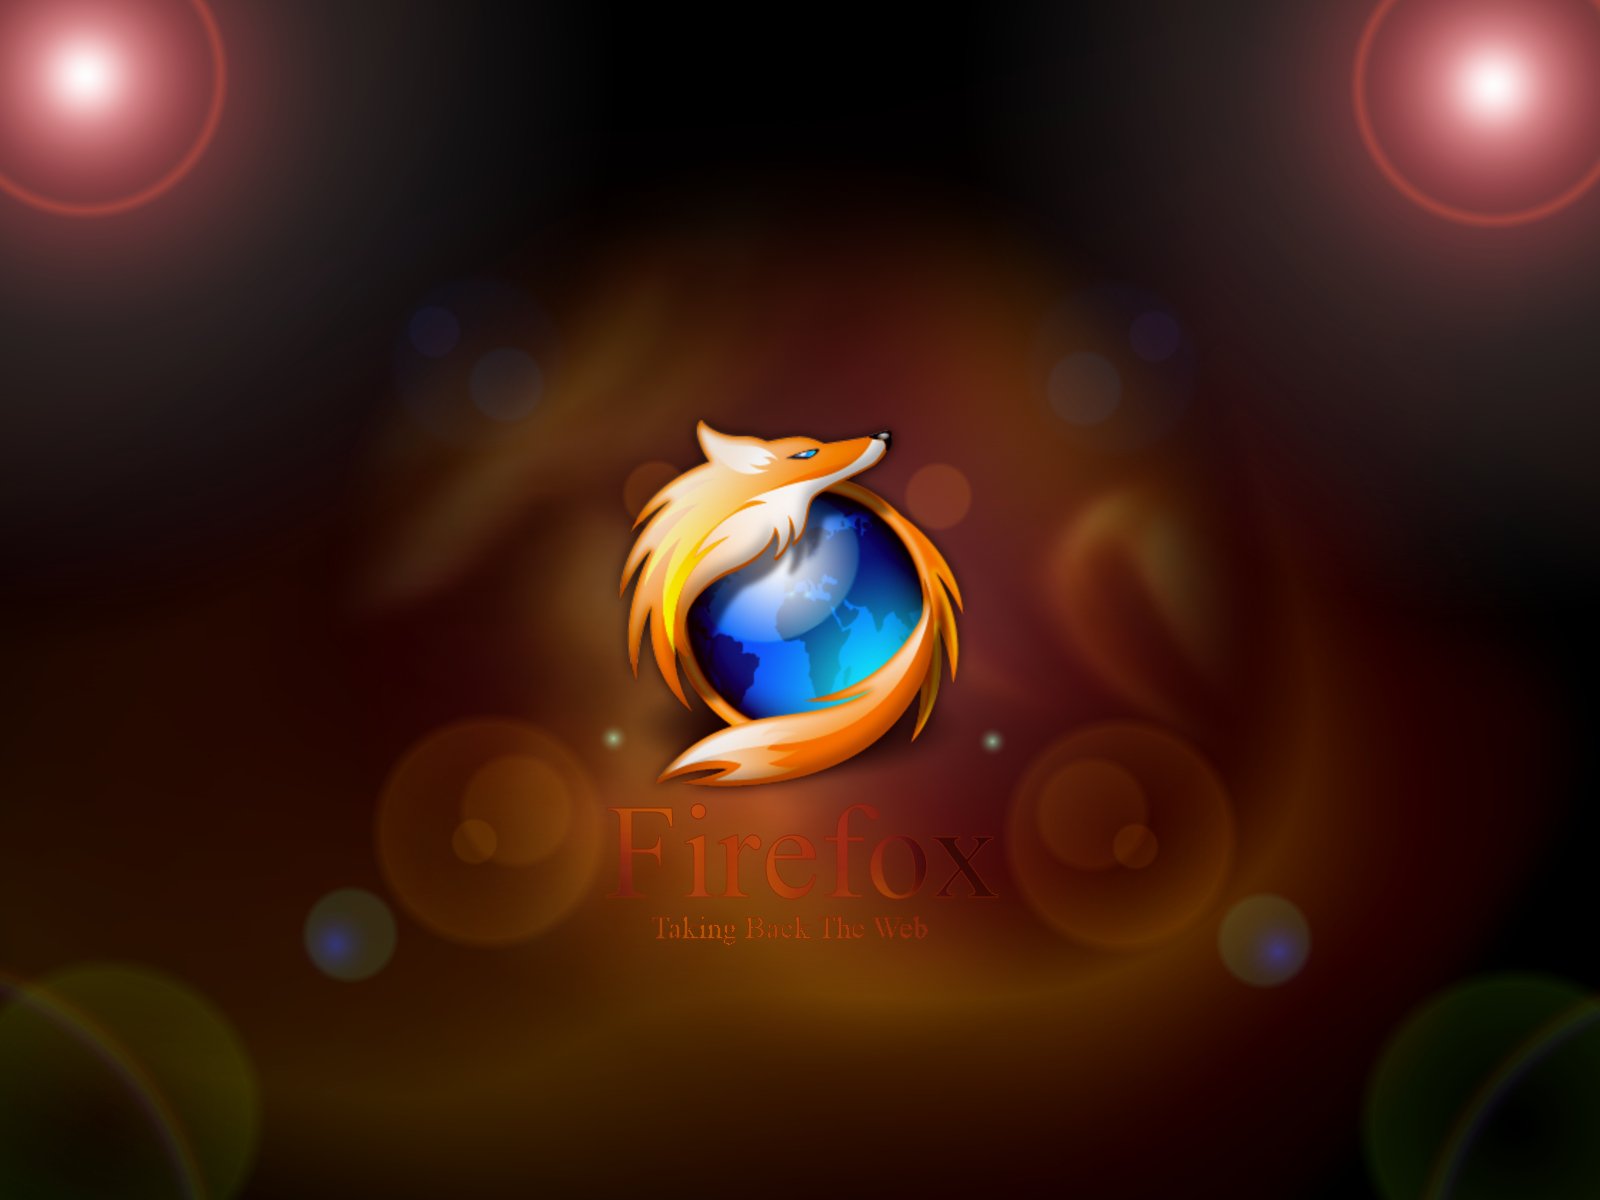 Beautiful Firefox Wallpaper For Your Desktop